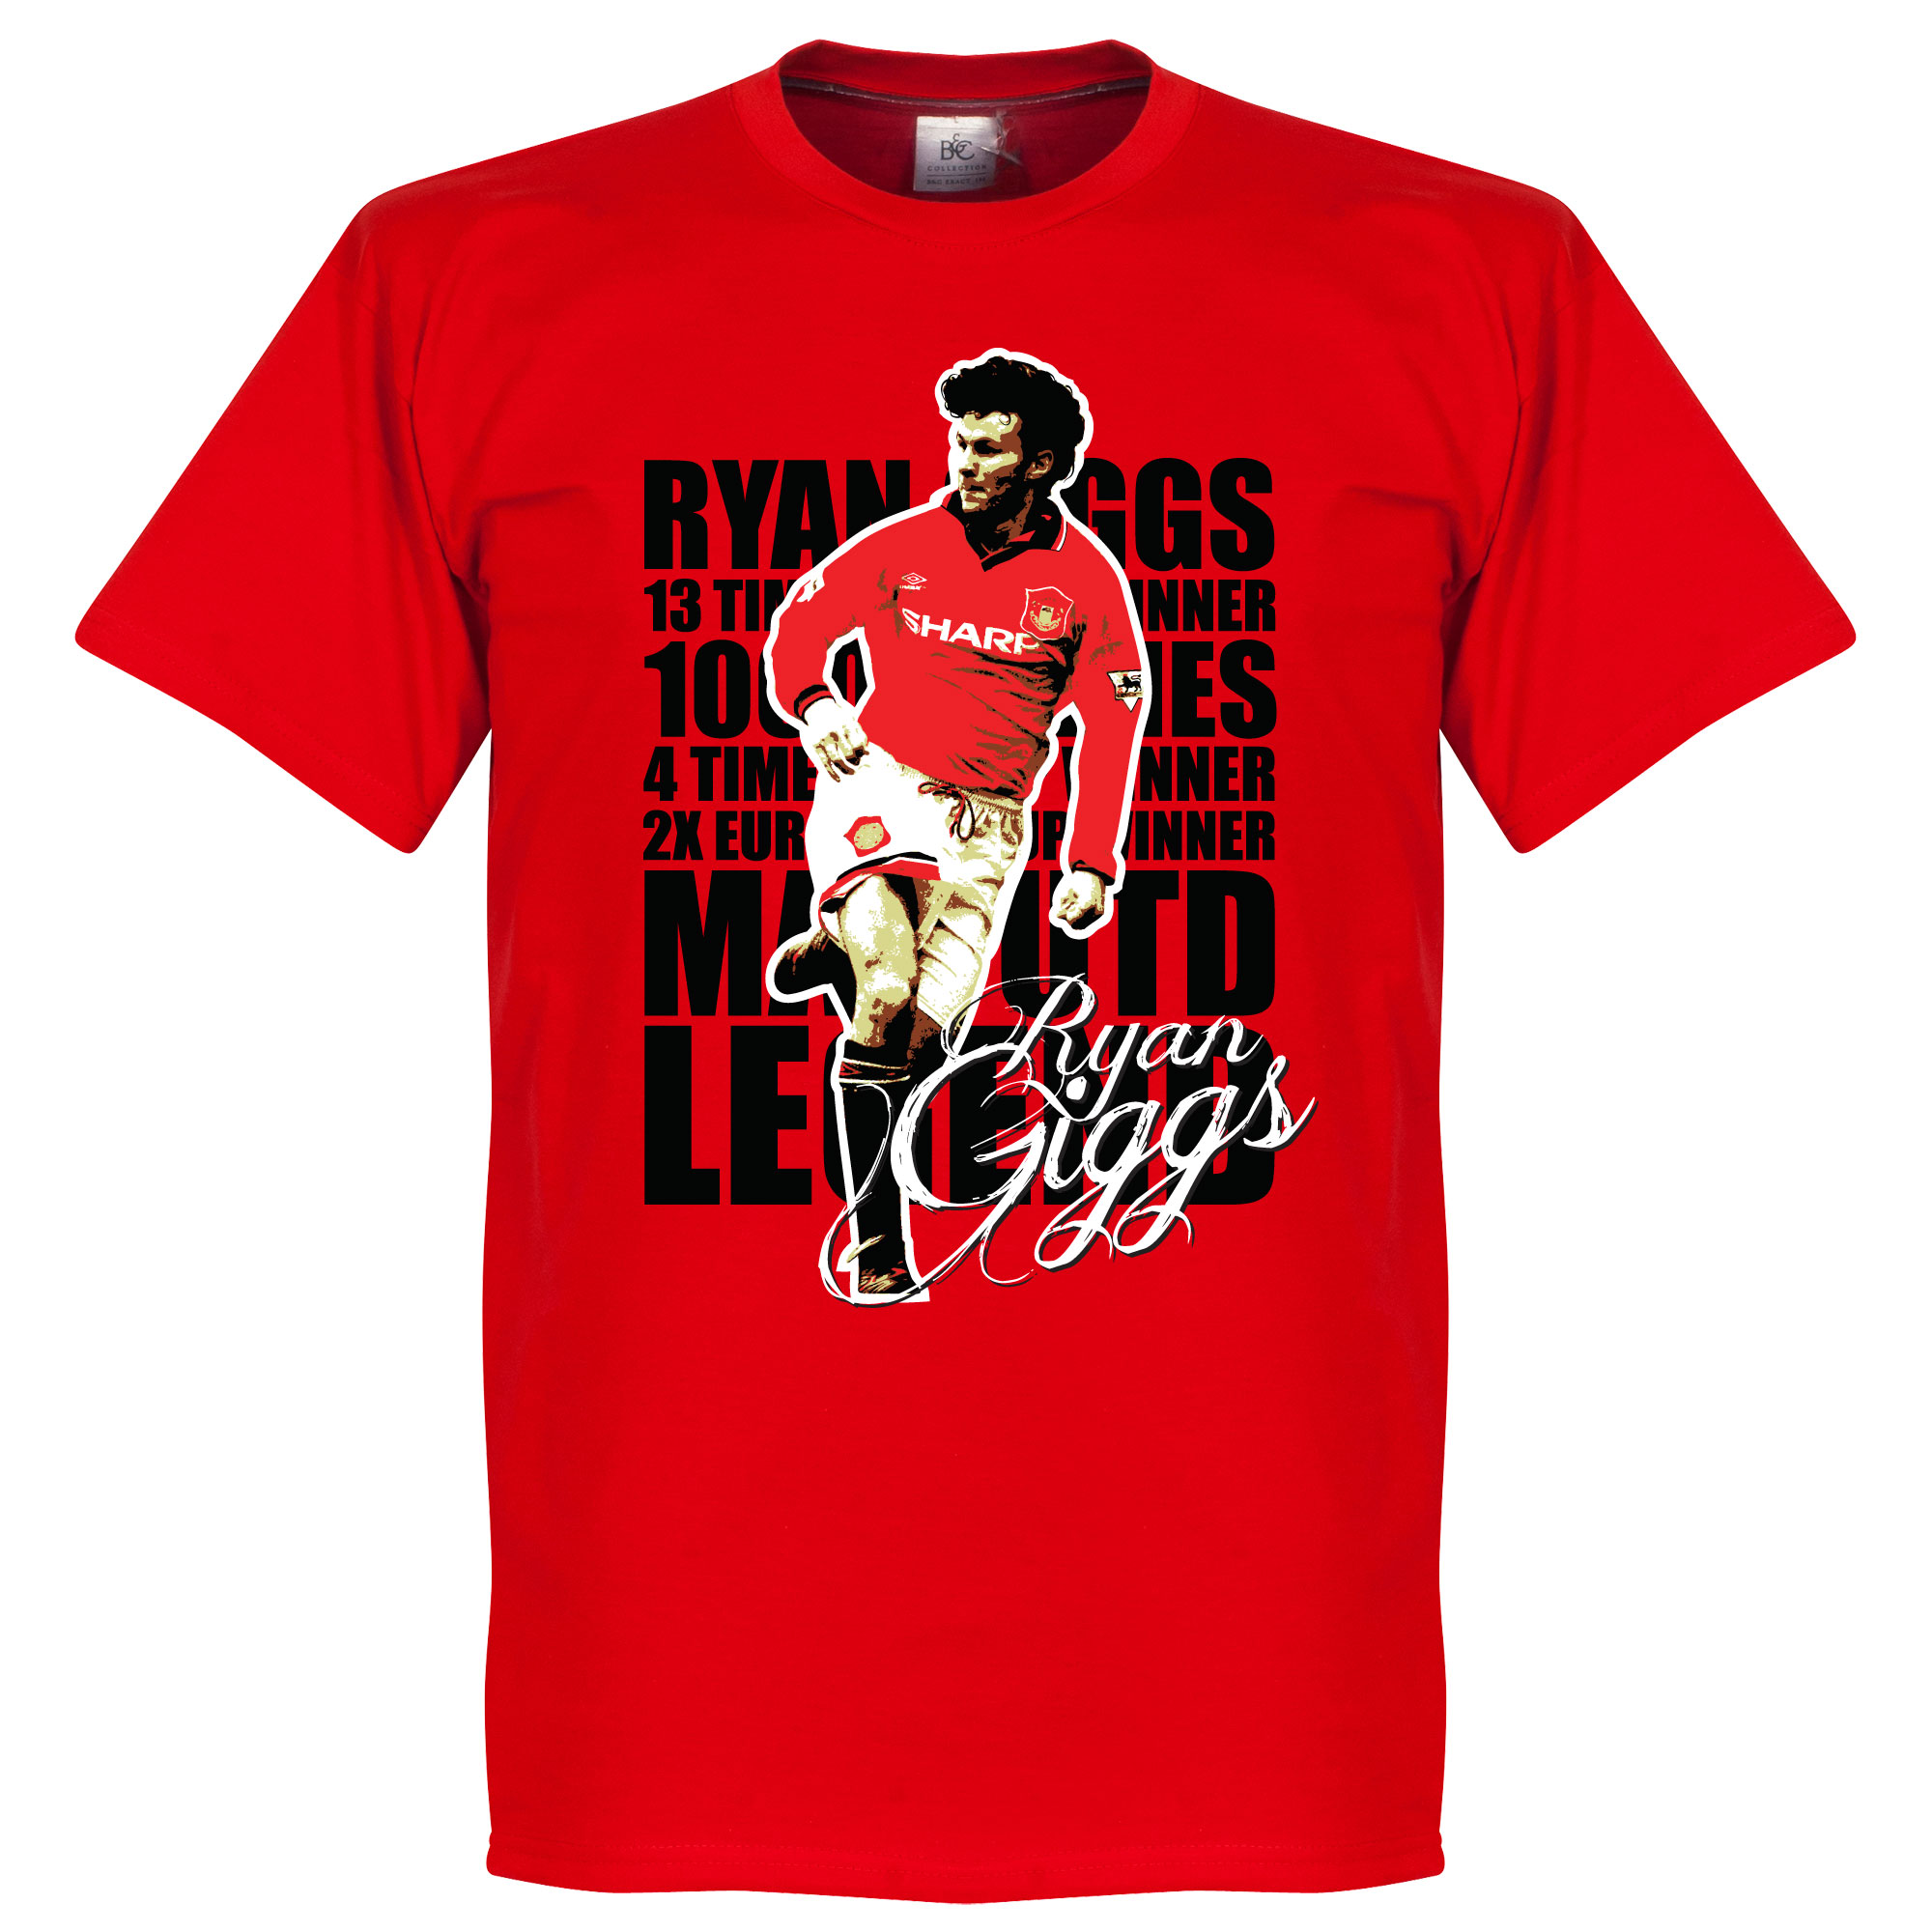 Ryan Giggs Legend T-Shirt S